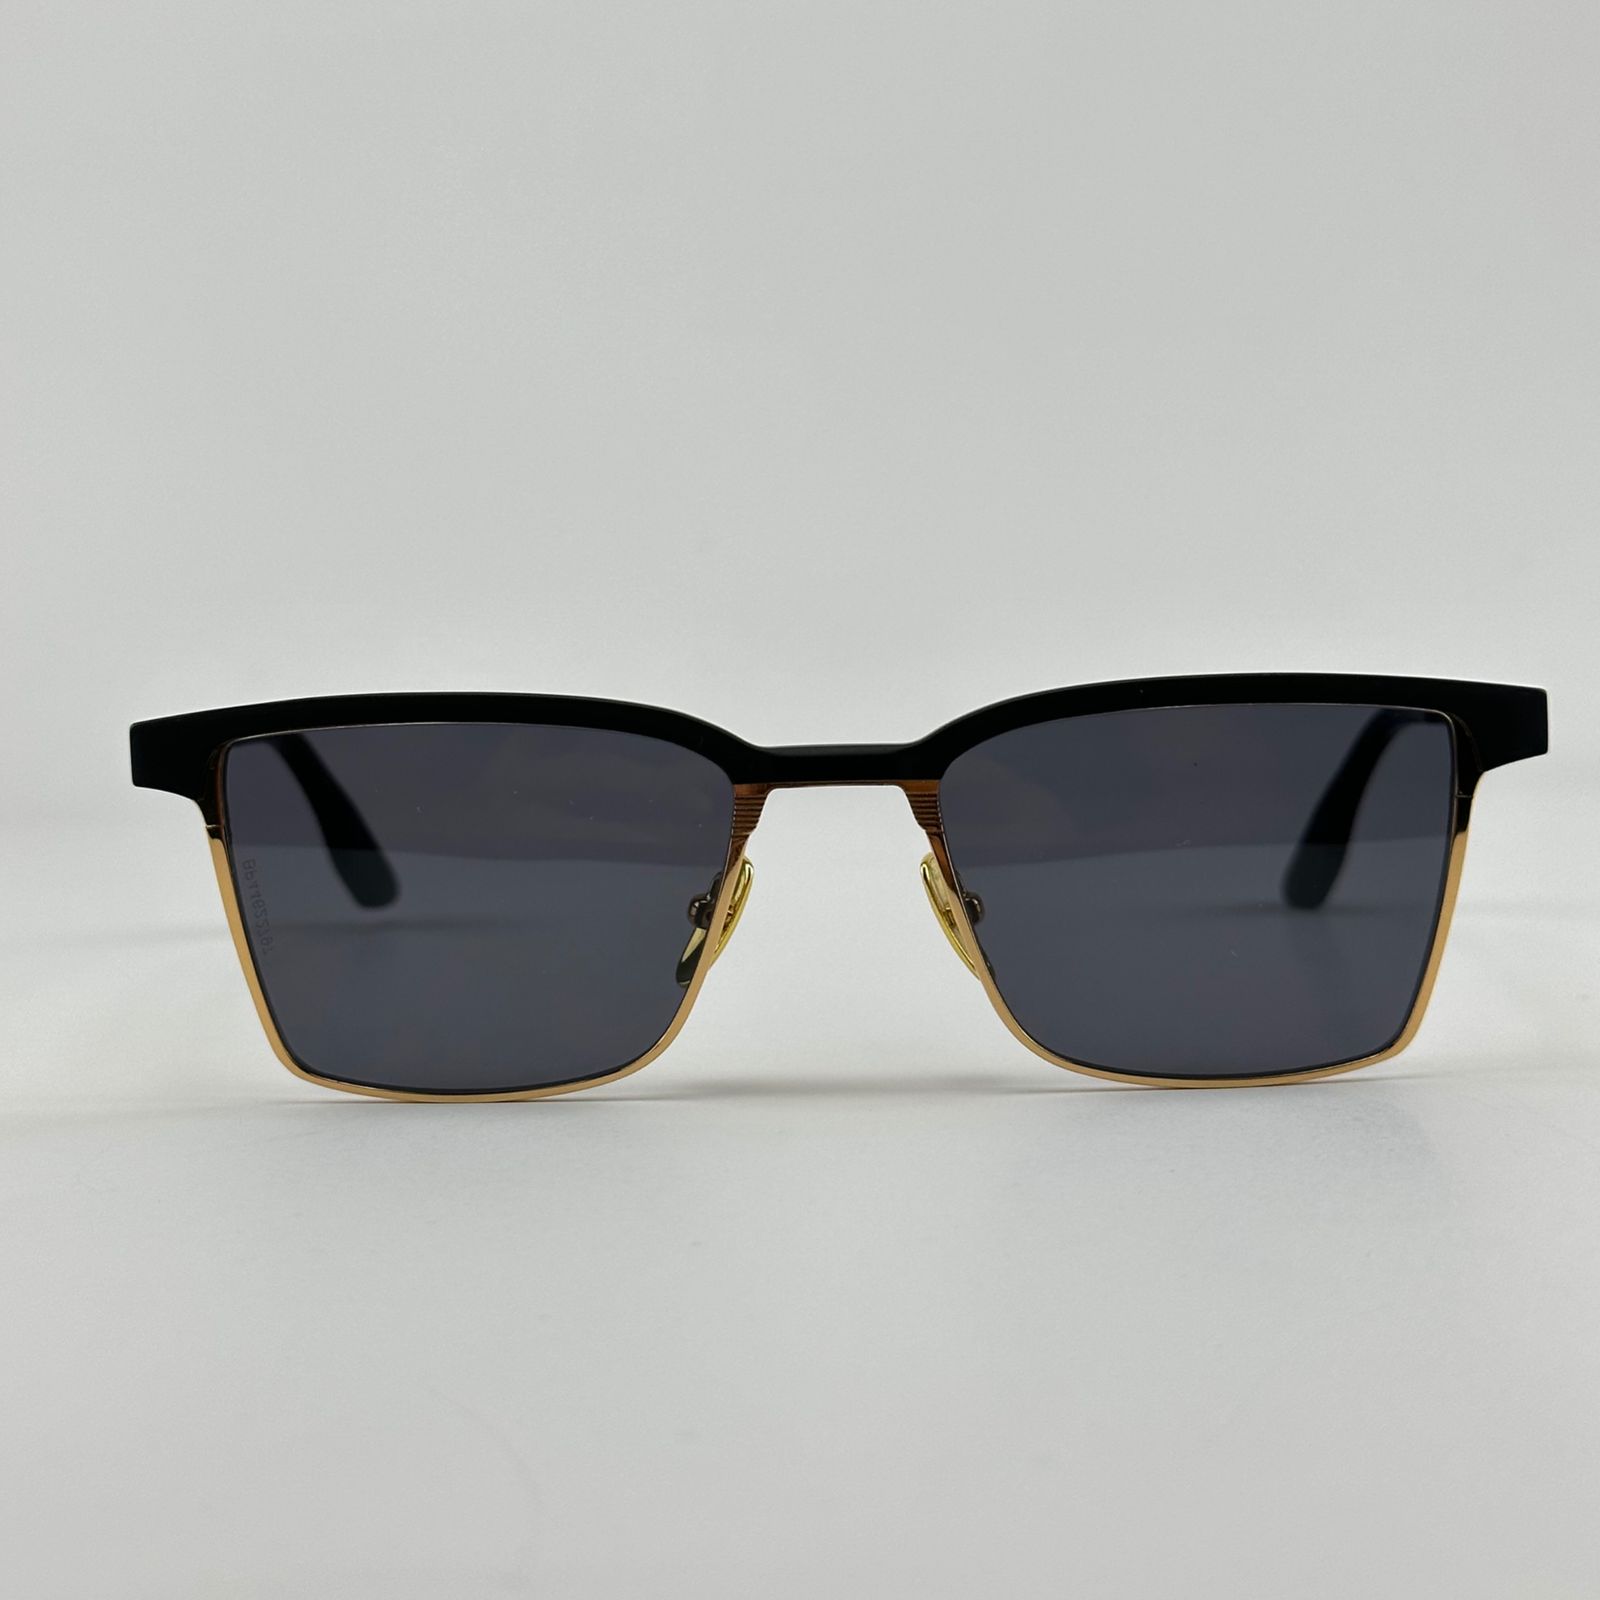 عینک آفتابی دیتا مدل DTX-137 01 SLV-GLD -  - 2